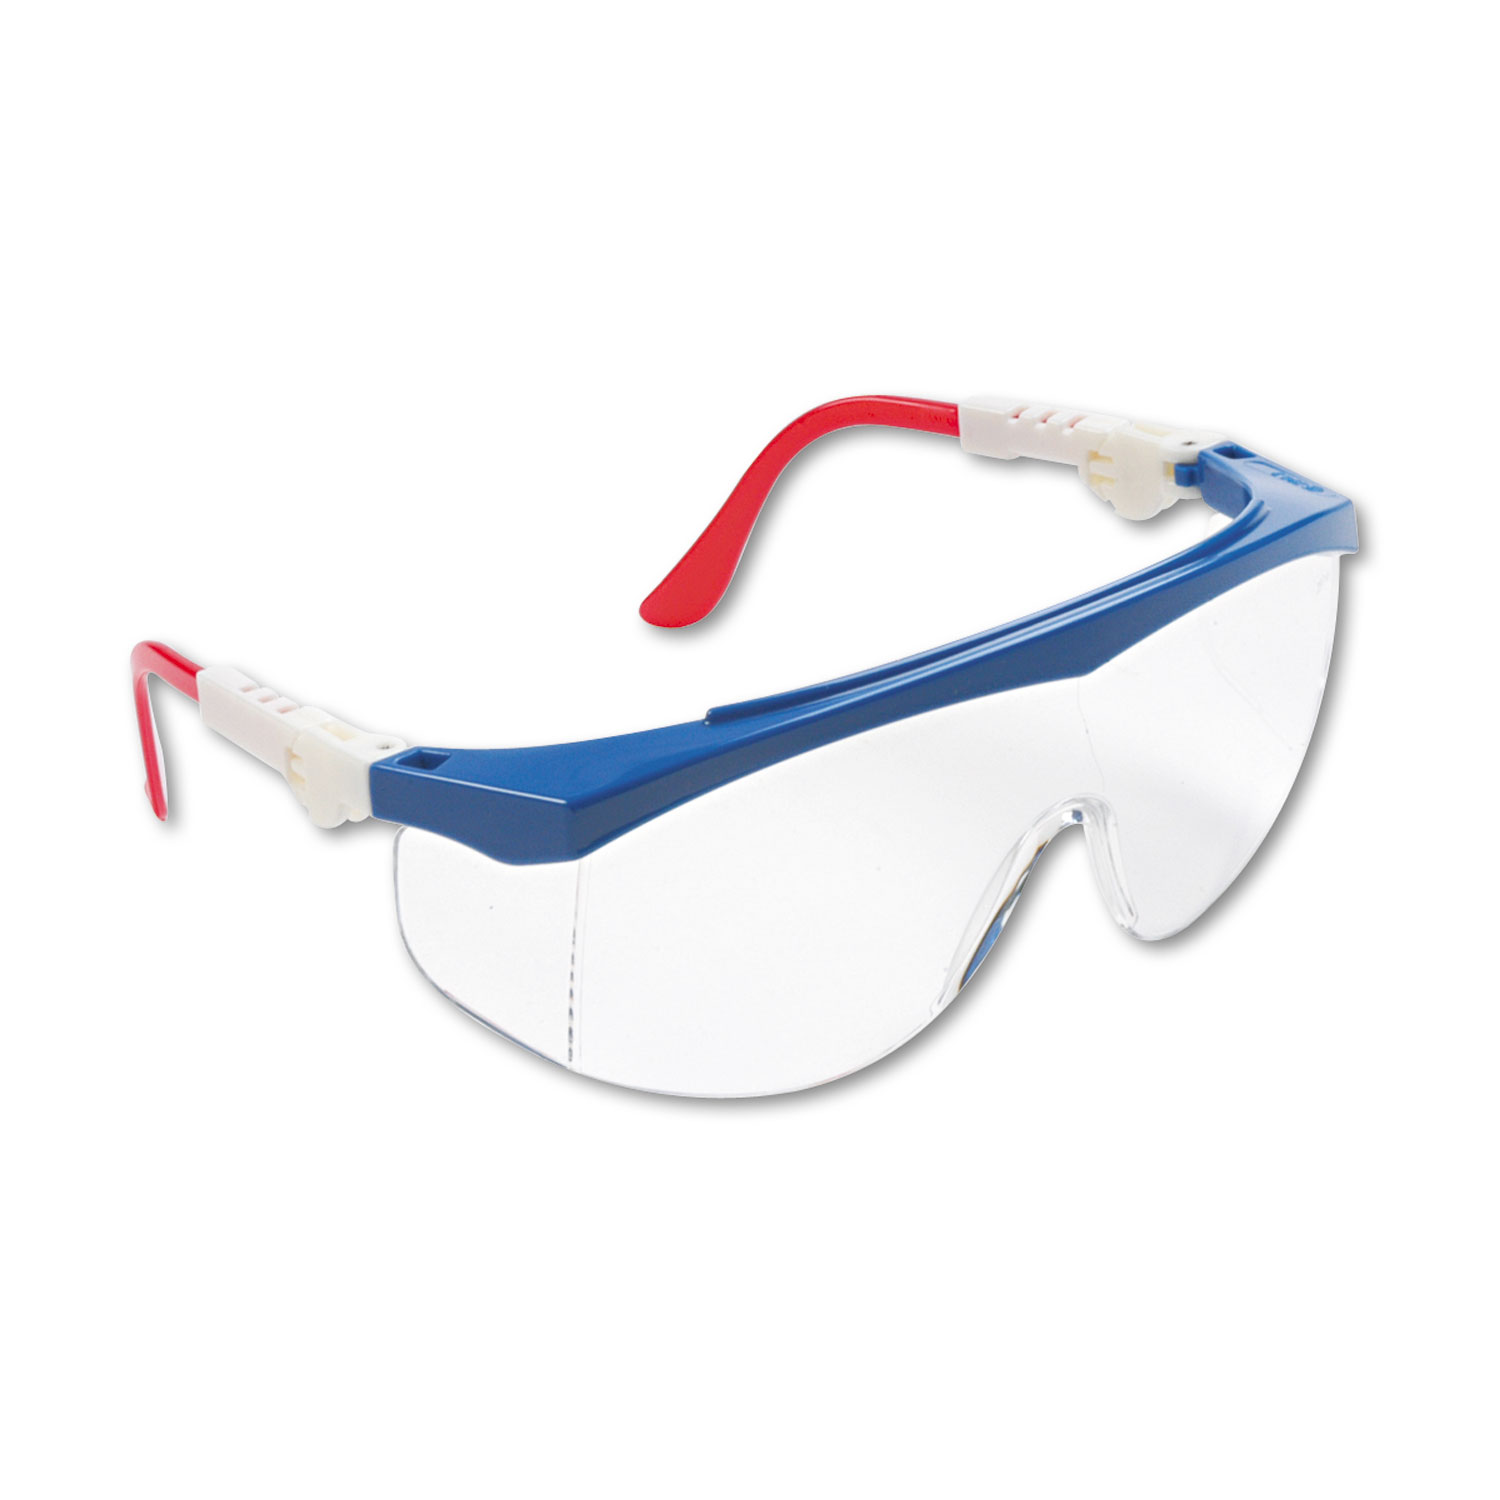 Tomahawk Wraparound Safety Glasses, Red/White/Blue Nylon Frame, Clear Lens